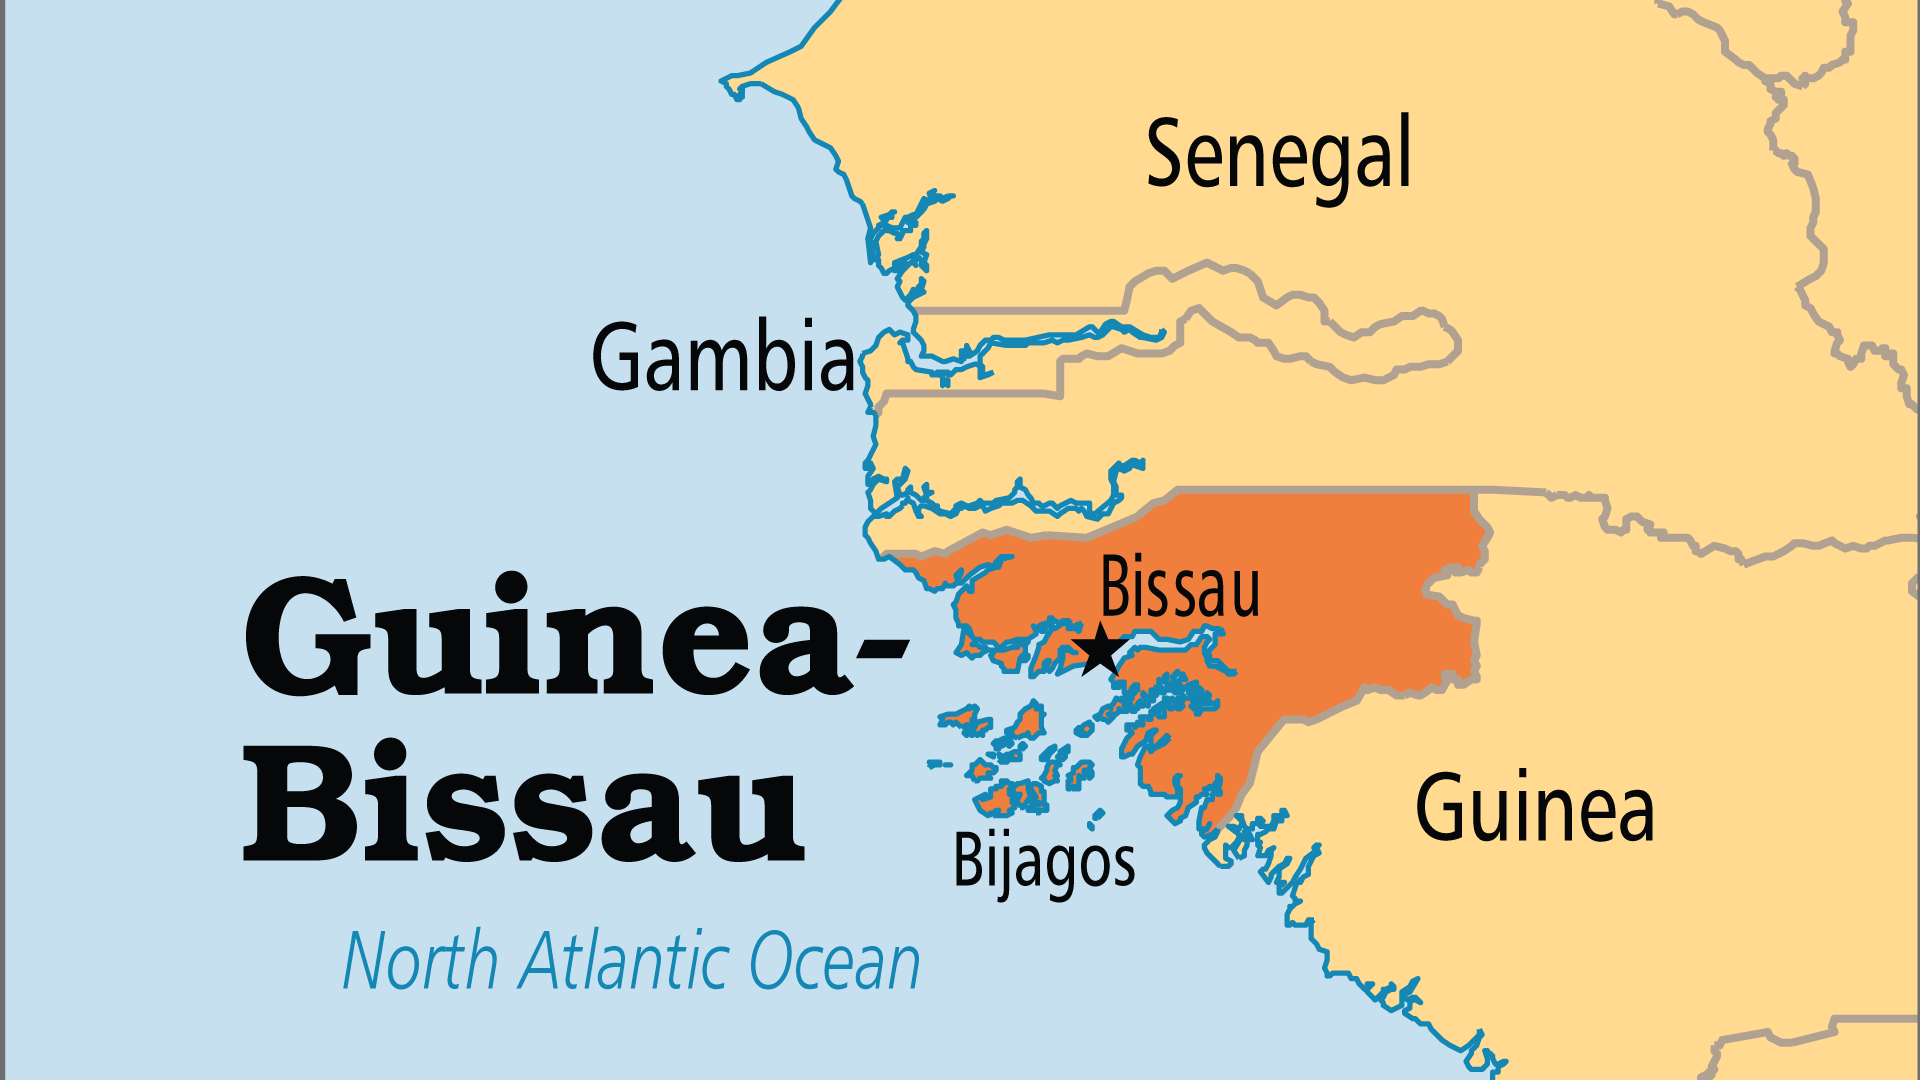 Guinea-Bissau (Operation World)